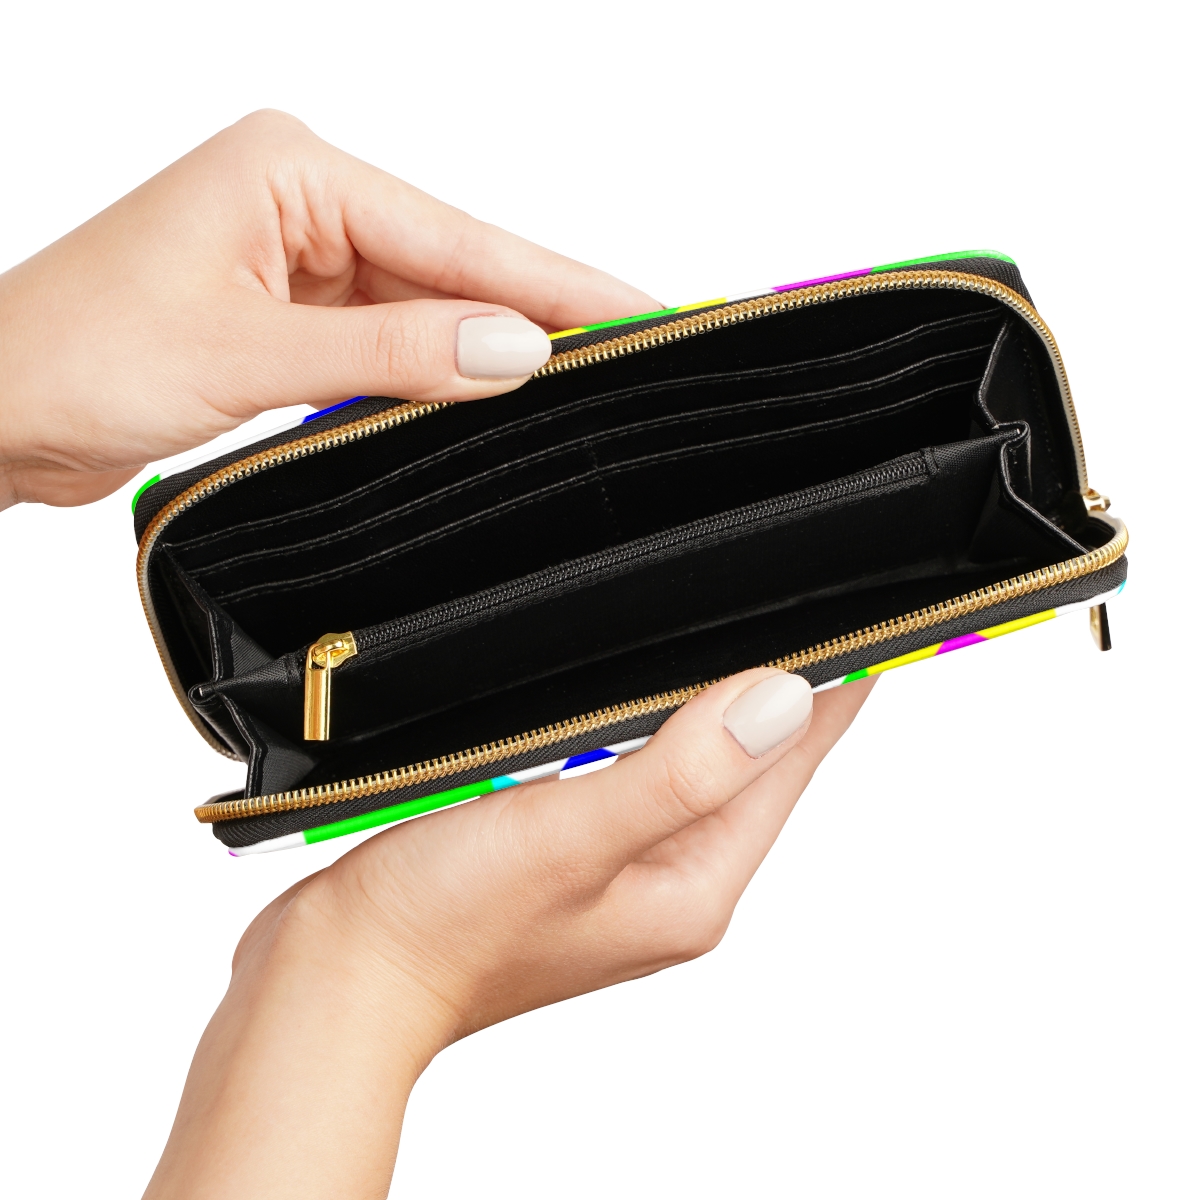 Zipper Wallet product thumbnail image